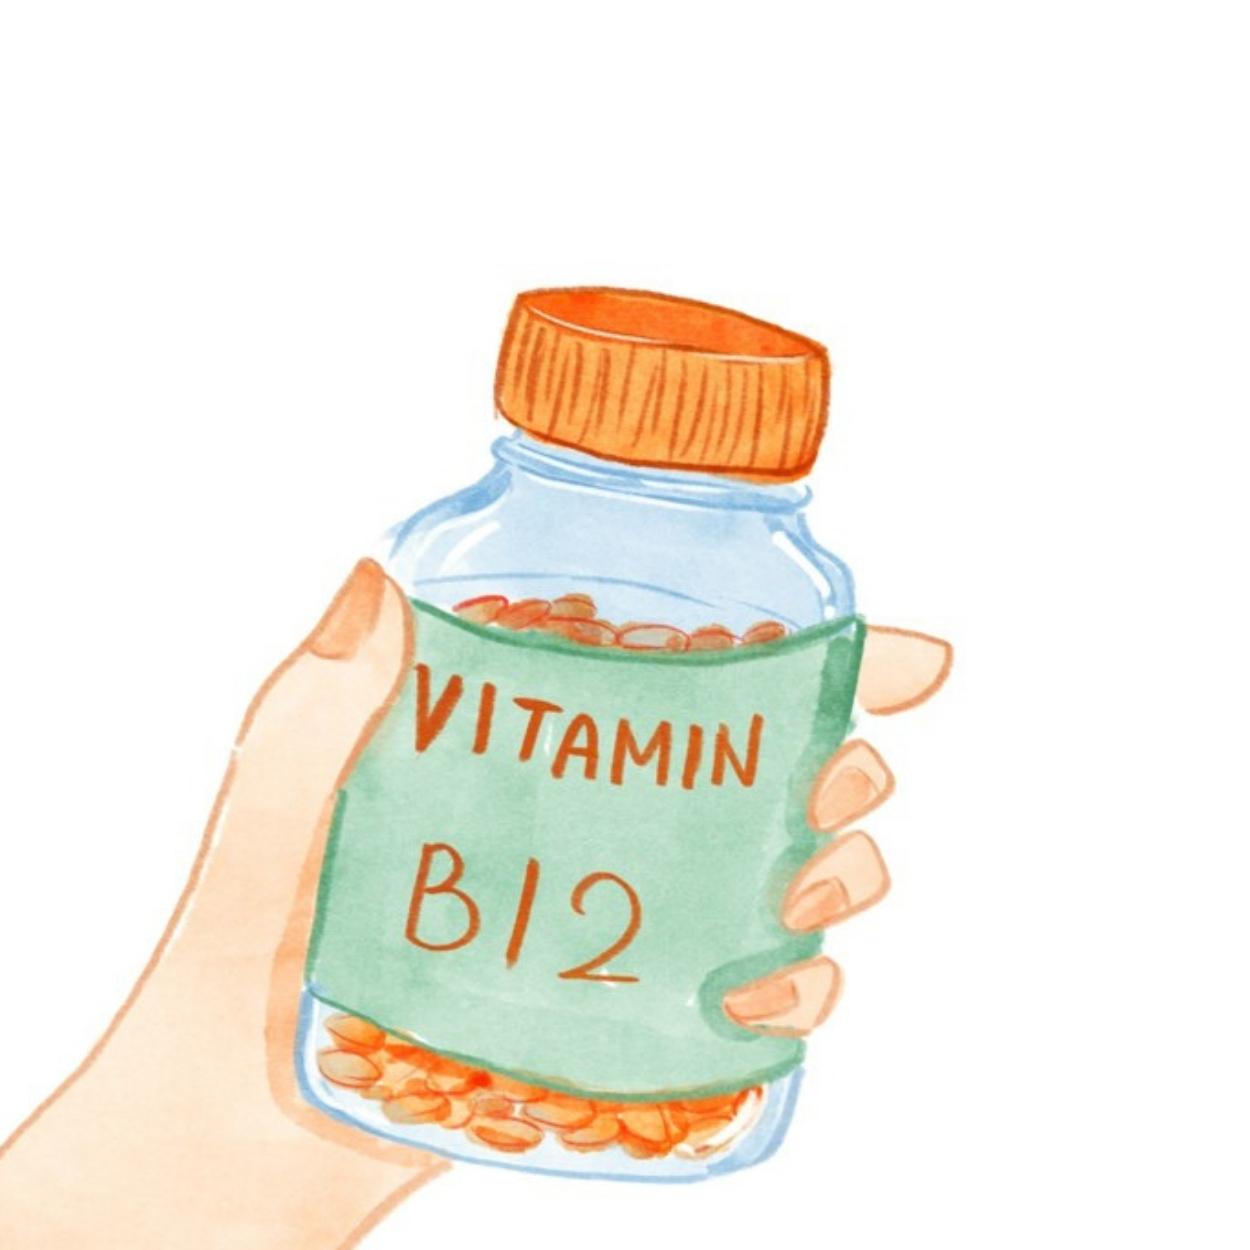 vitamina b12 quando suplementar 0003 Camada 6